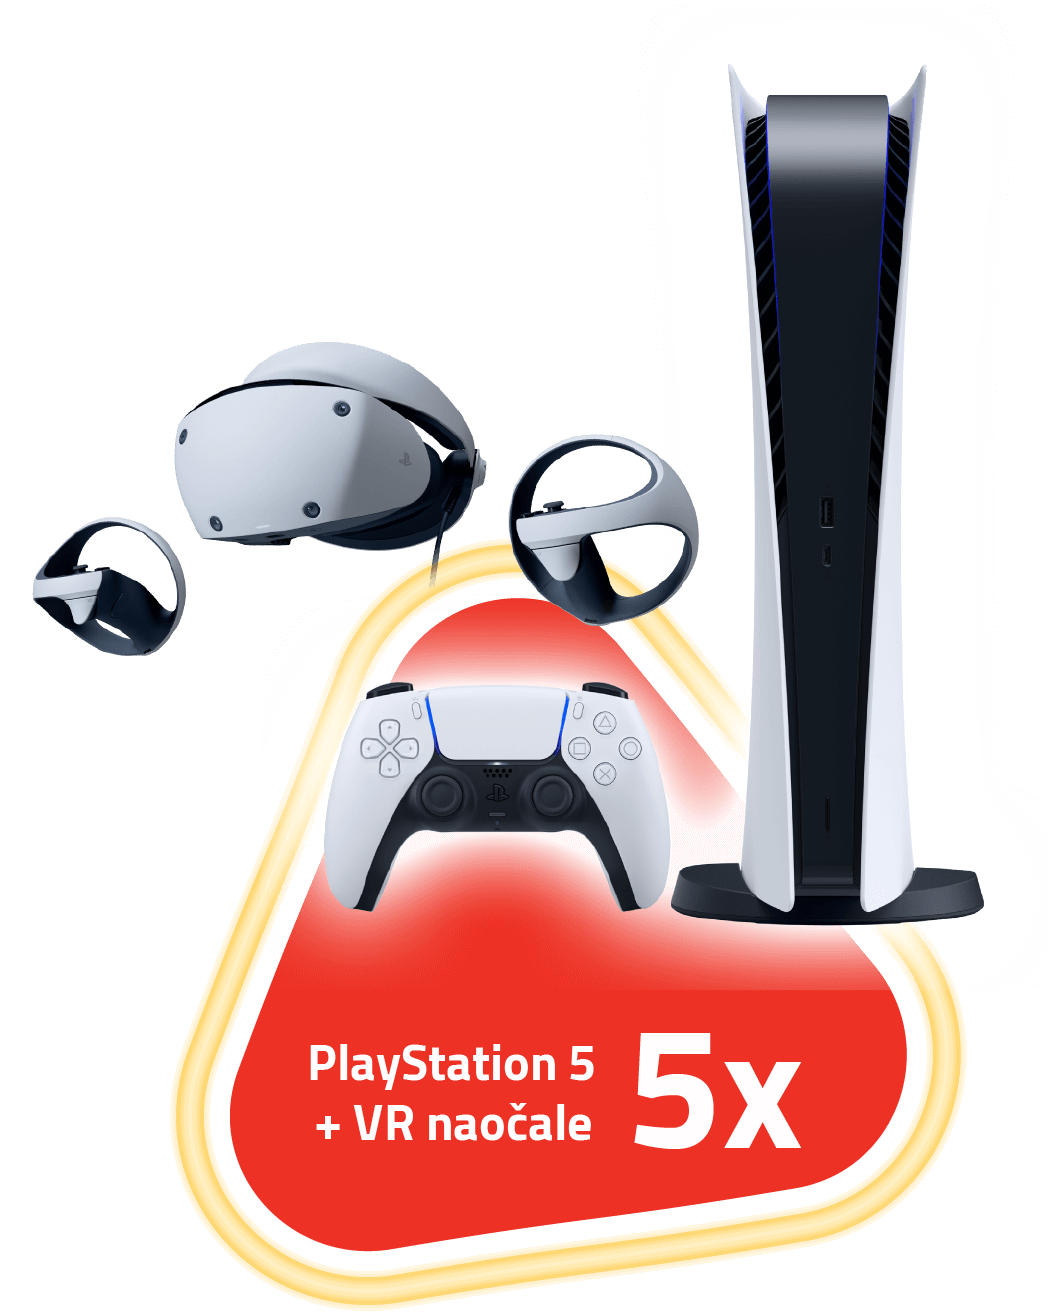 Playstation 5 + VR naočale